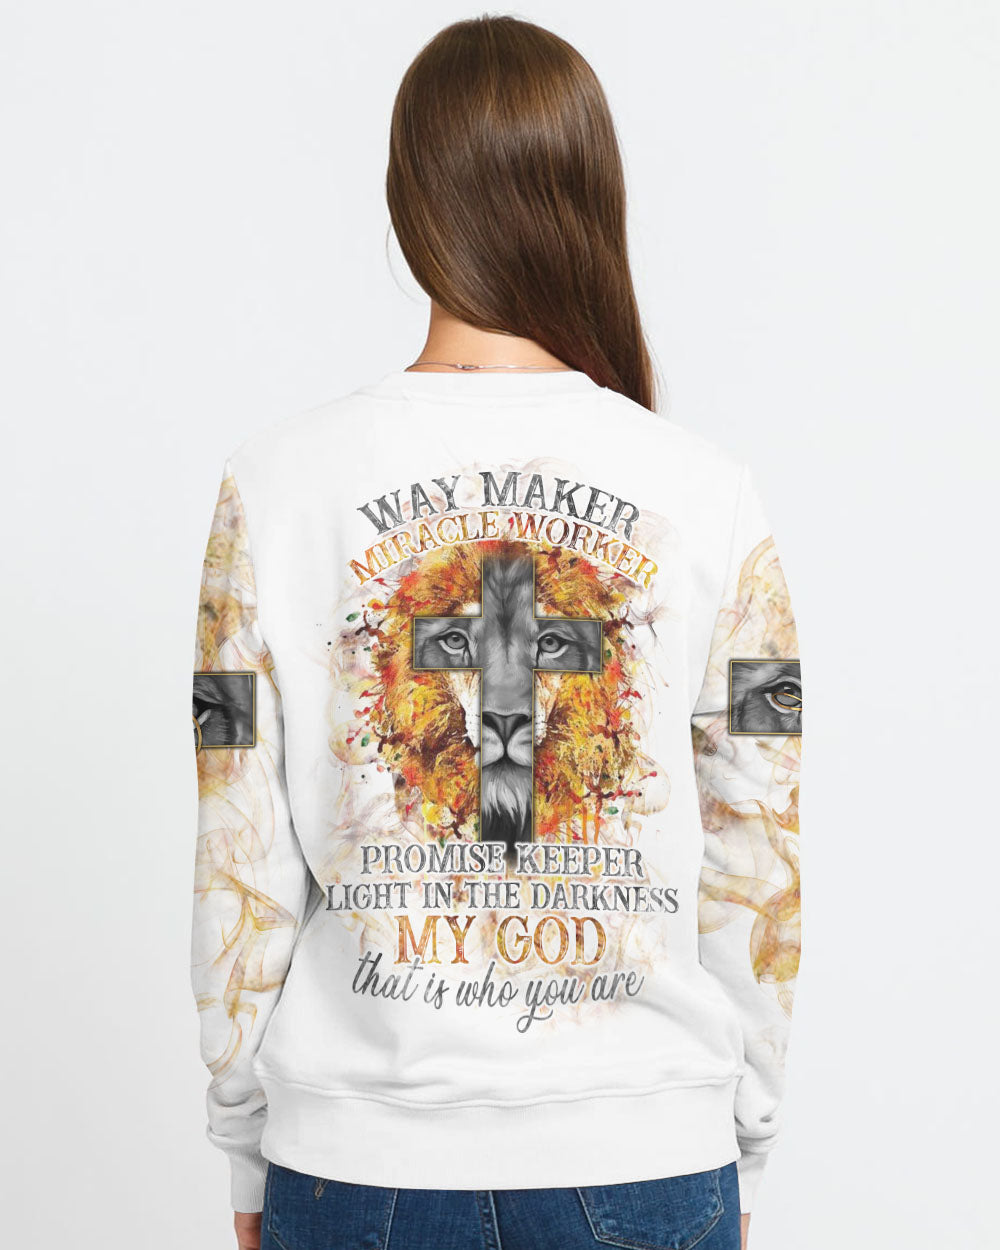 Way Maker Miracle Worker Half Lion Smoke Women's Christian Sweatshirt